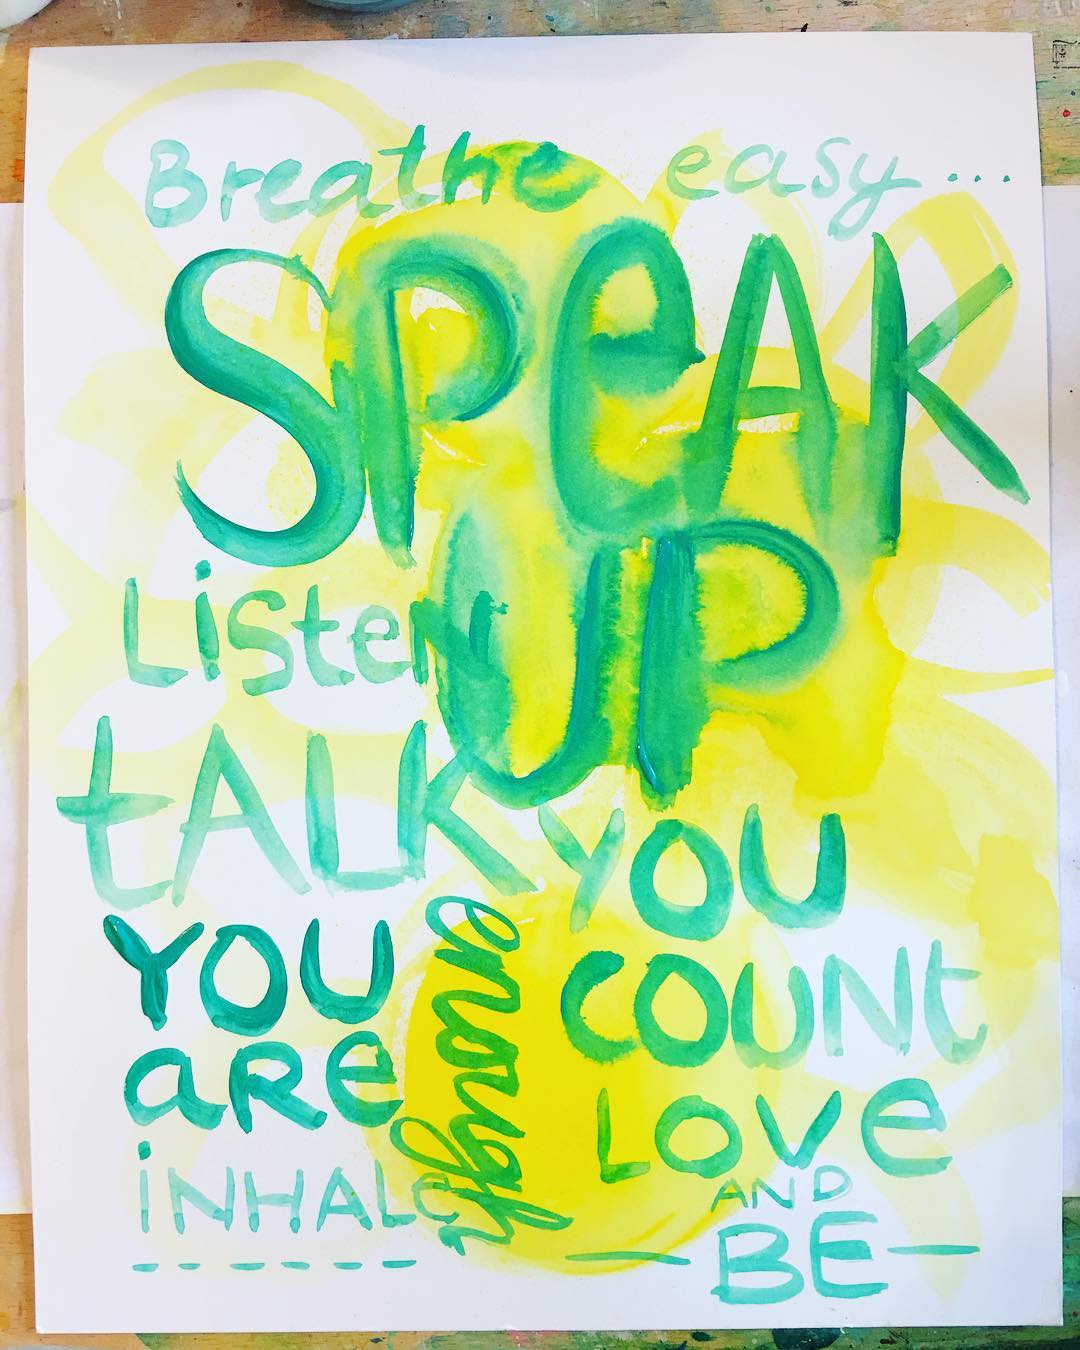 Just some words today...in my art journal page...speak up...talk...listen...